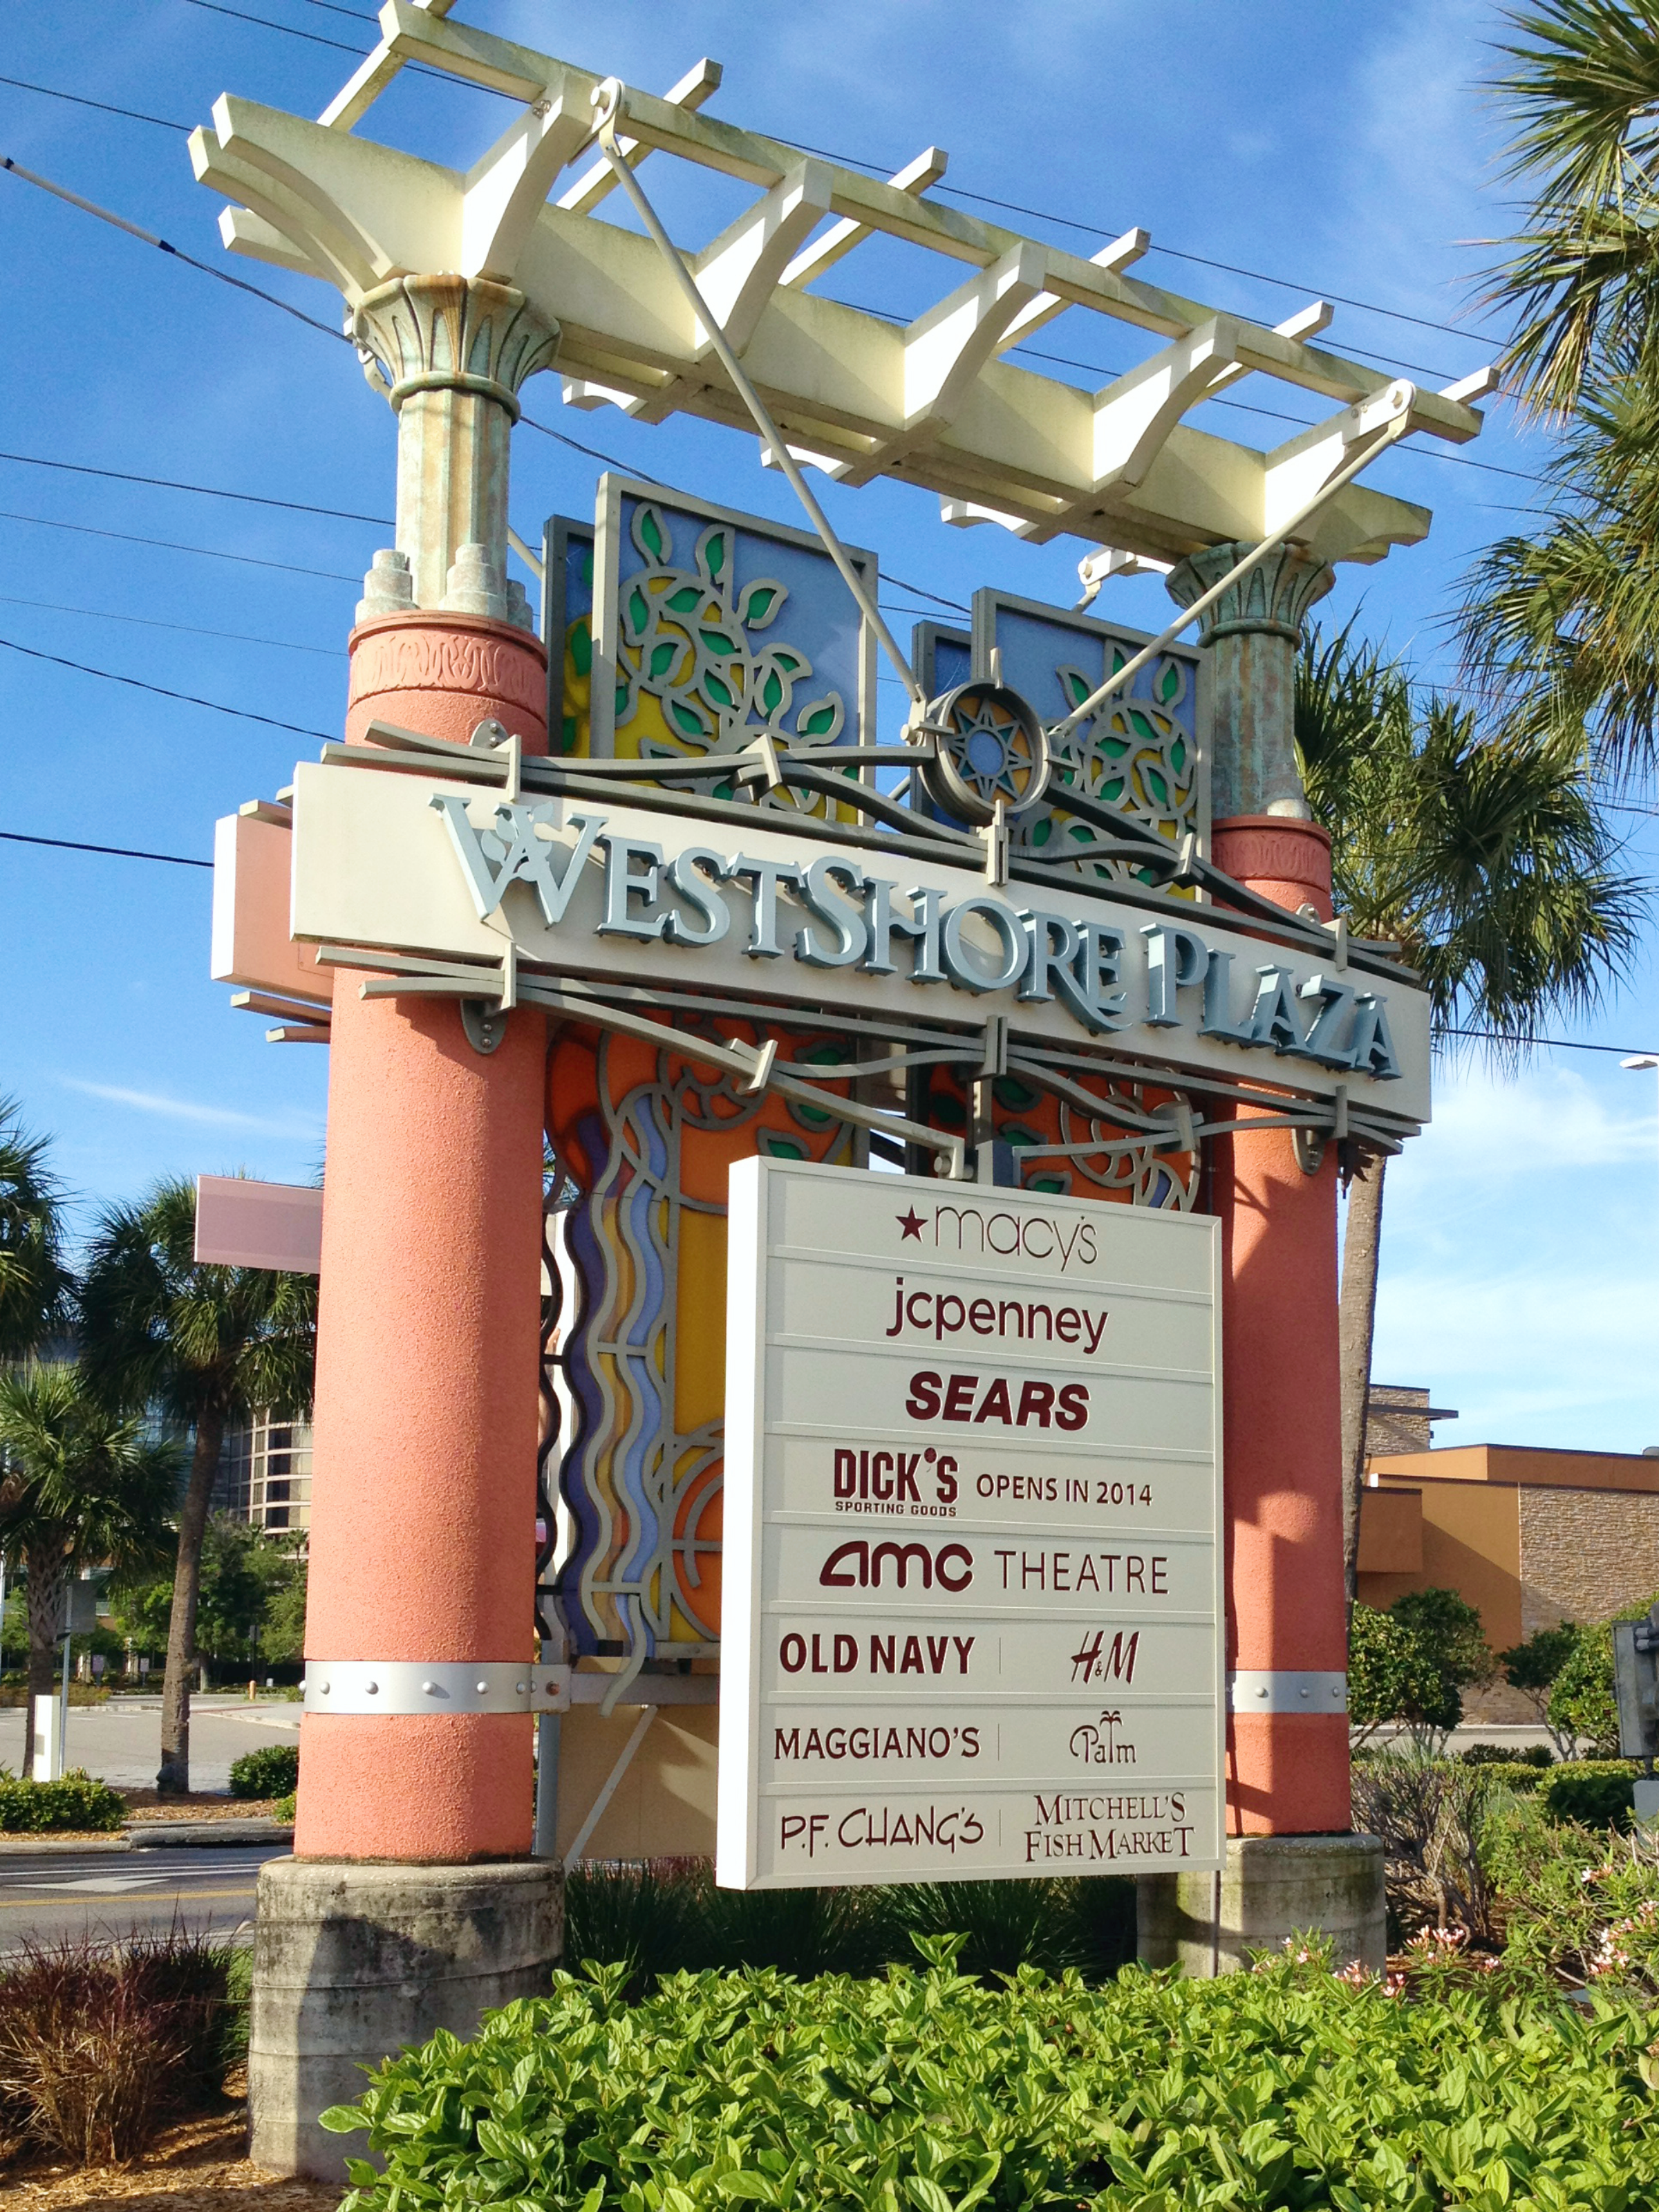 "Westshore Plaza" Pylon sign